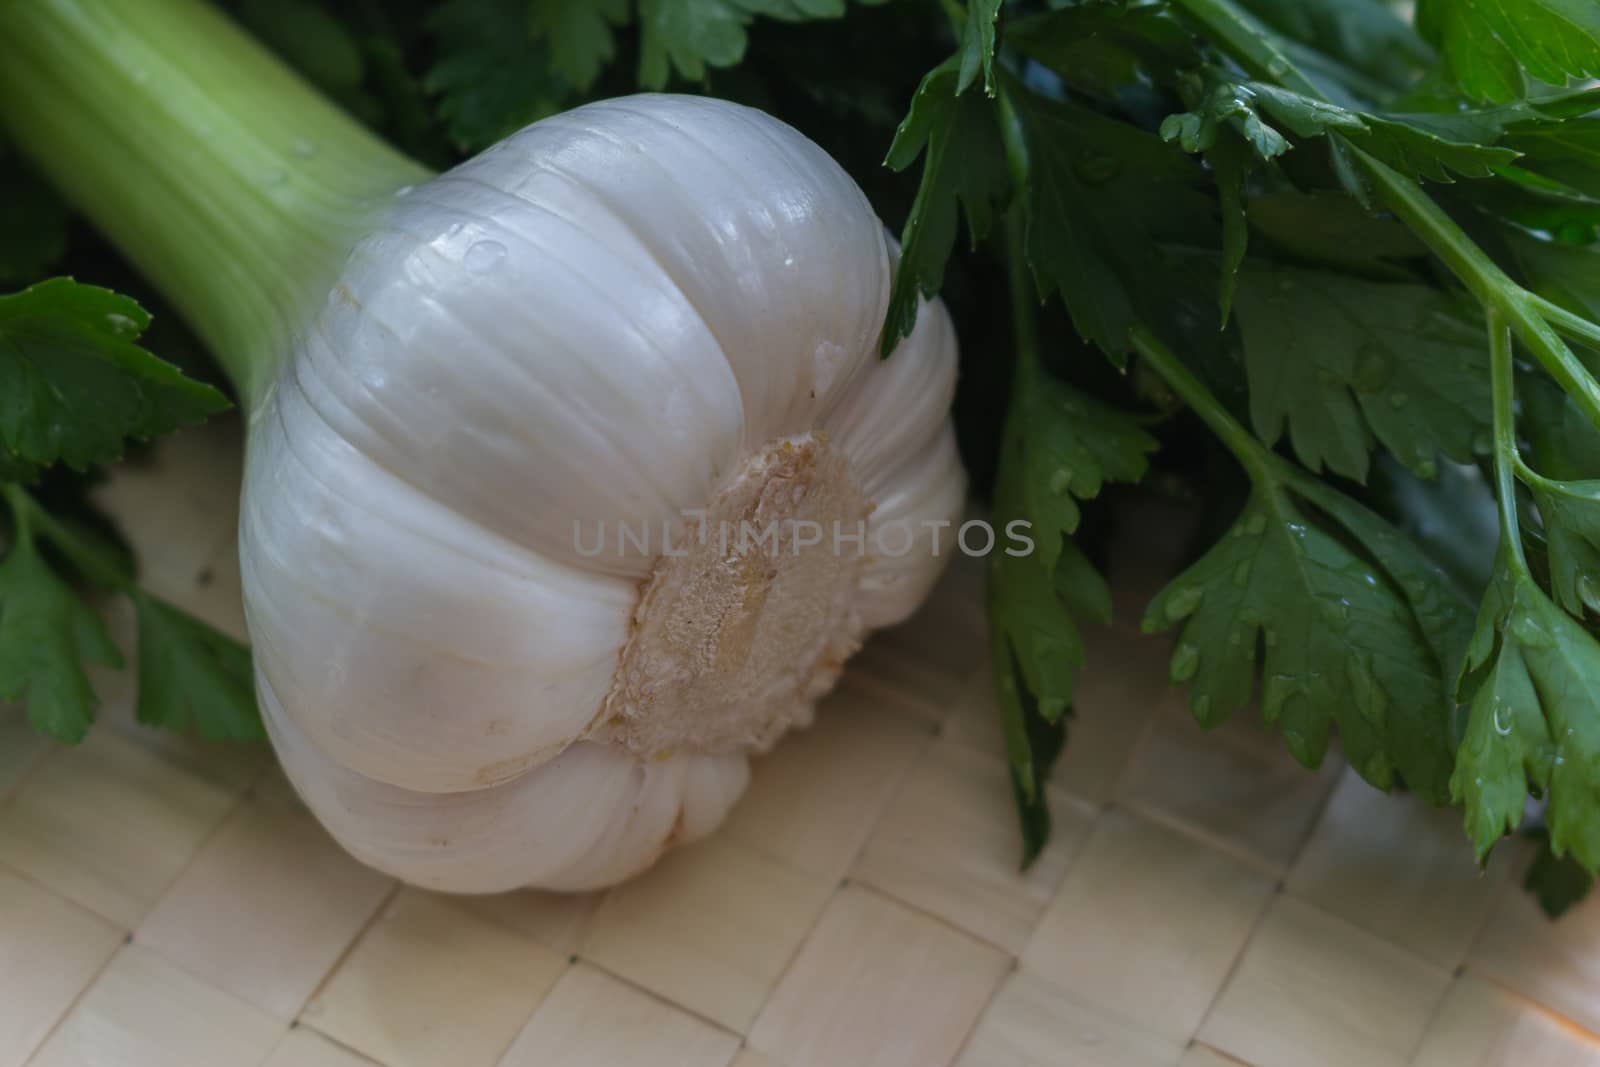 Fresh garlic by robertboss